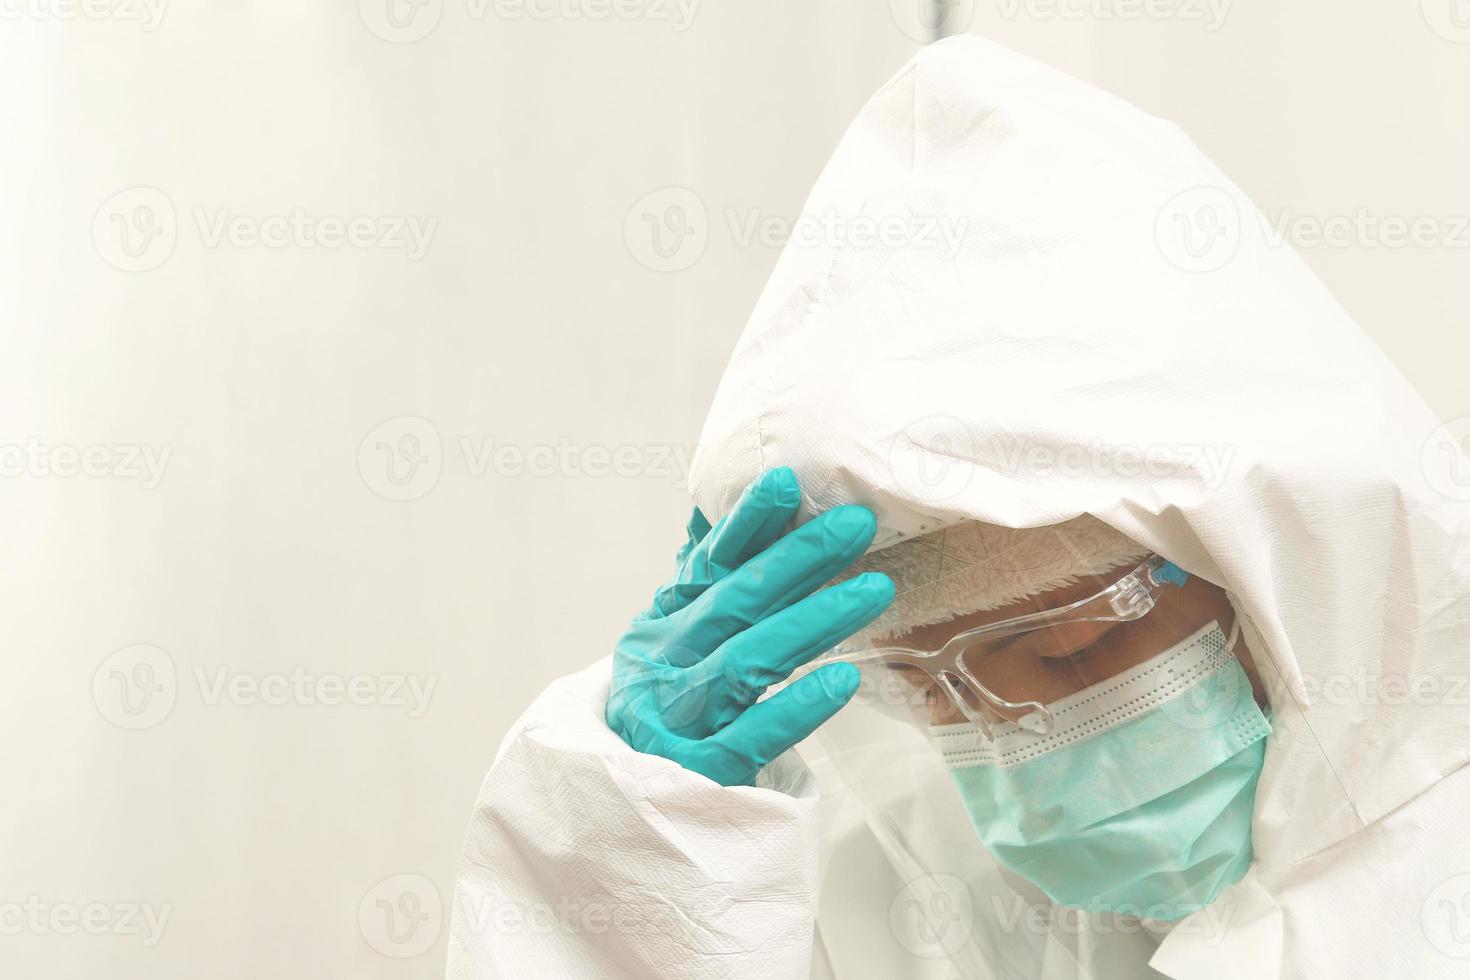 verpleegster vervelend ppe in behandeling kamer foto